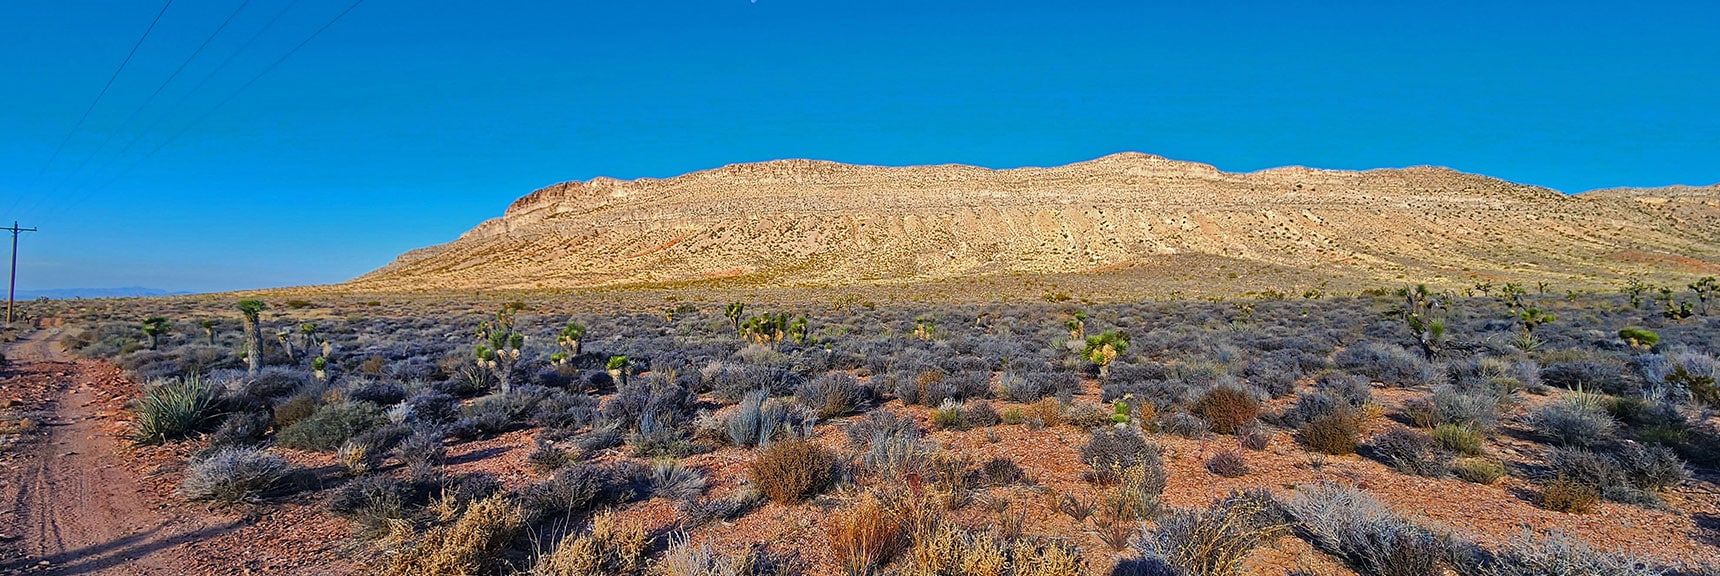 Southeast Corner of Landmark Bluff from Powerline Maintenance Road | Landmark Bluff Summit | Lovell Canyon, Nevada